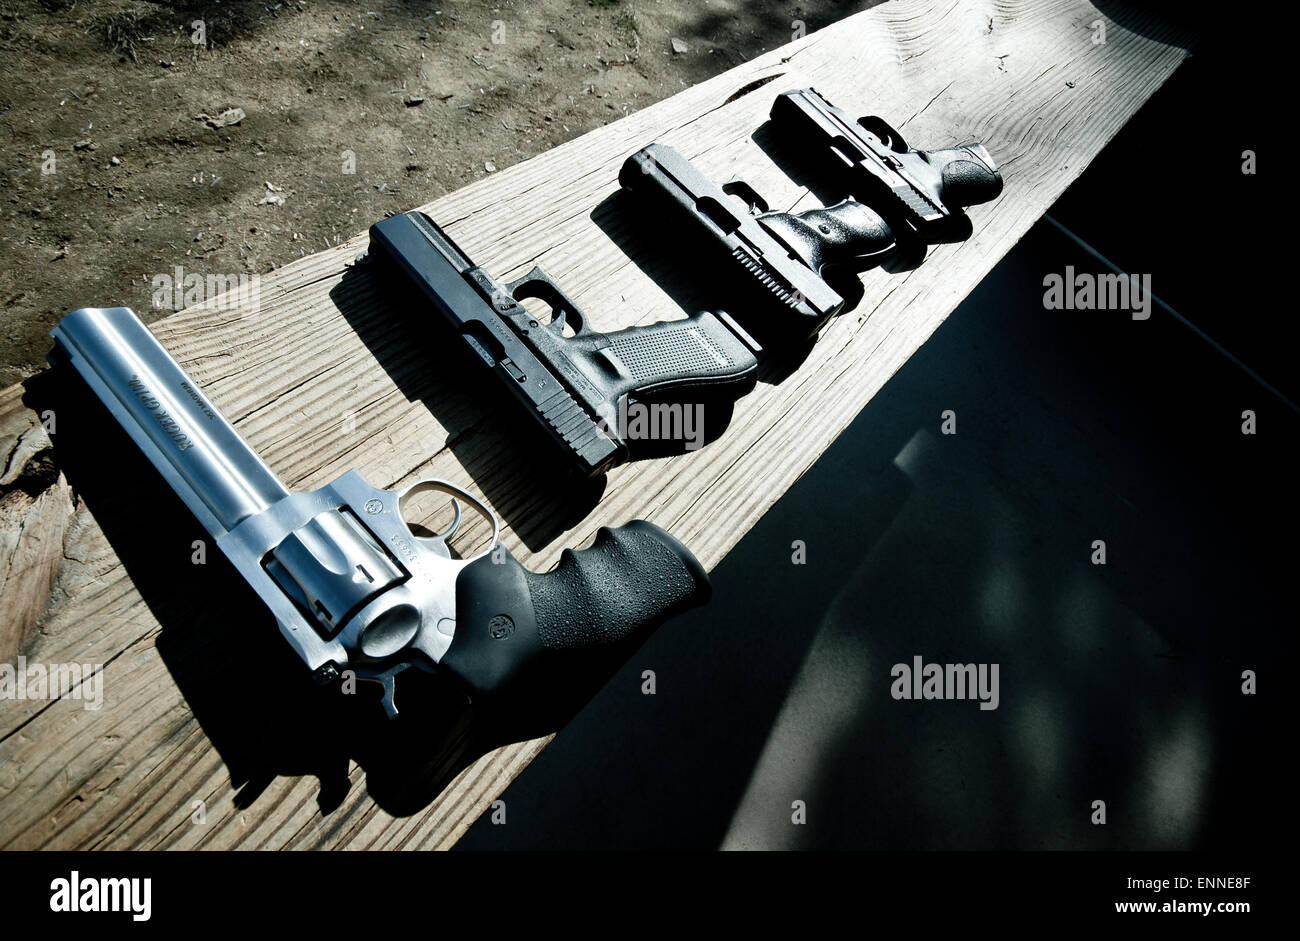 Guns at the firing range. Stock Photo